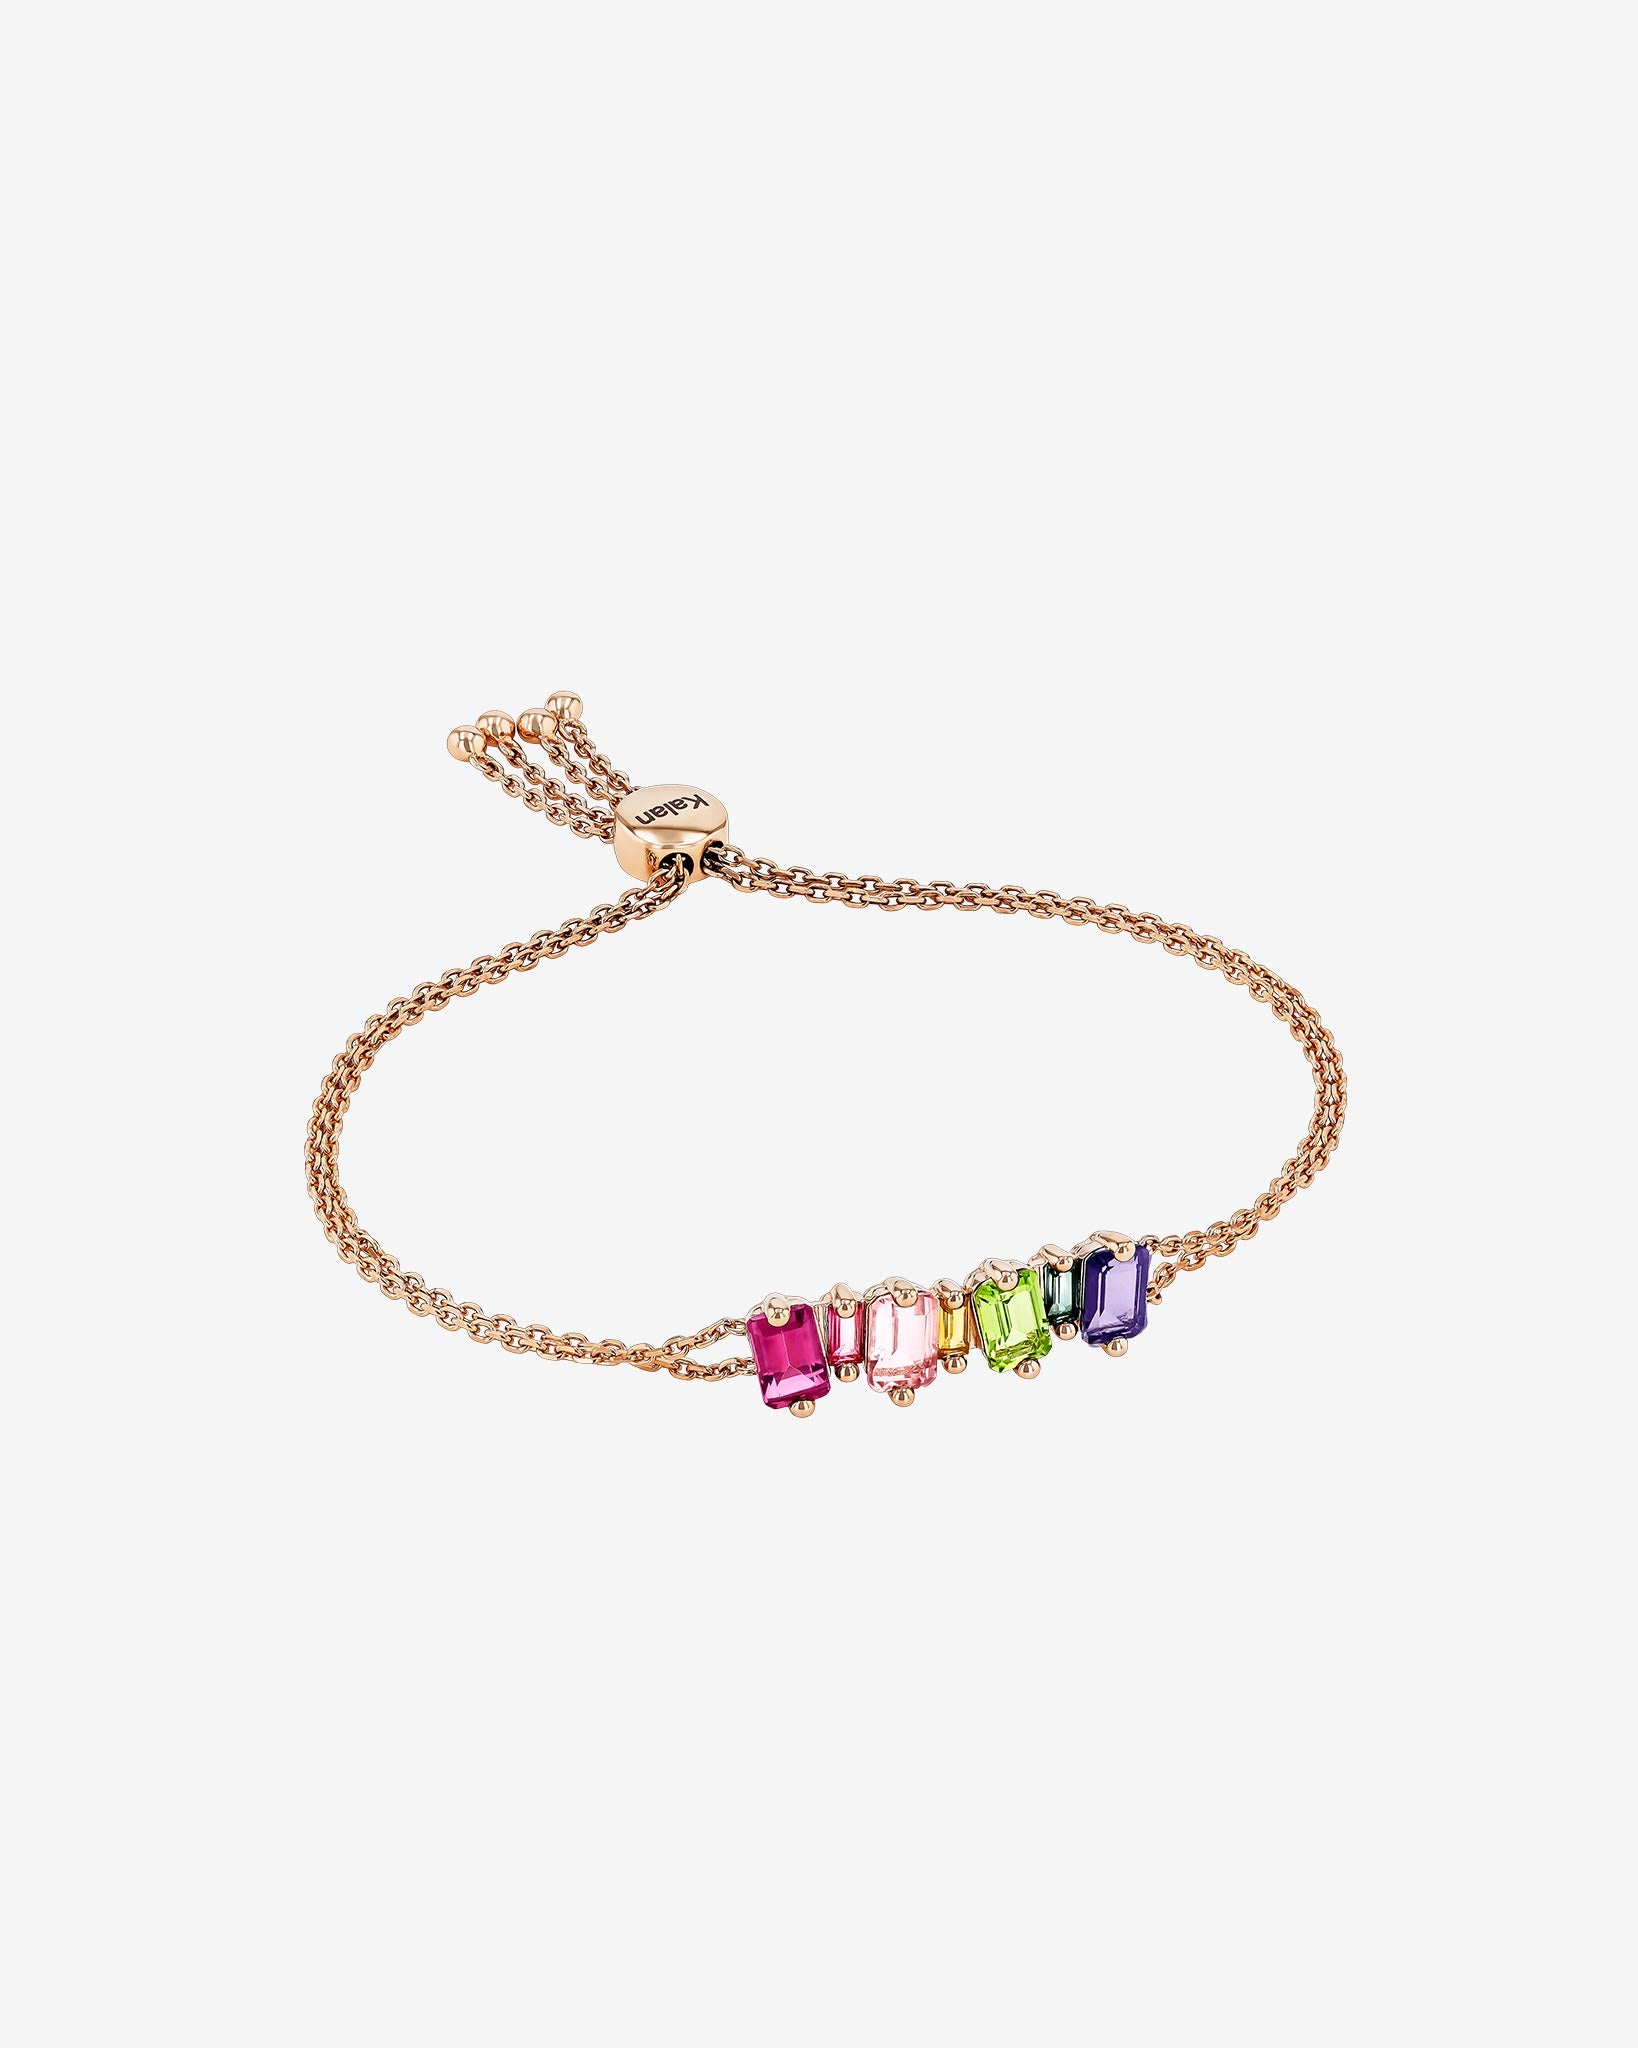 Kalan By Suzanne Kalan Ann Rainbow Pulley Bracelet in 14k rose gold